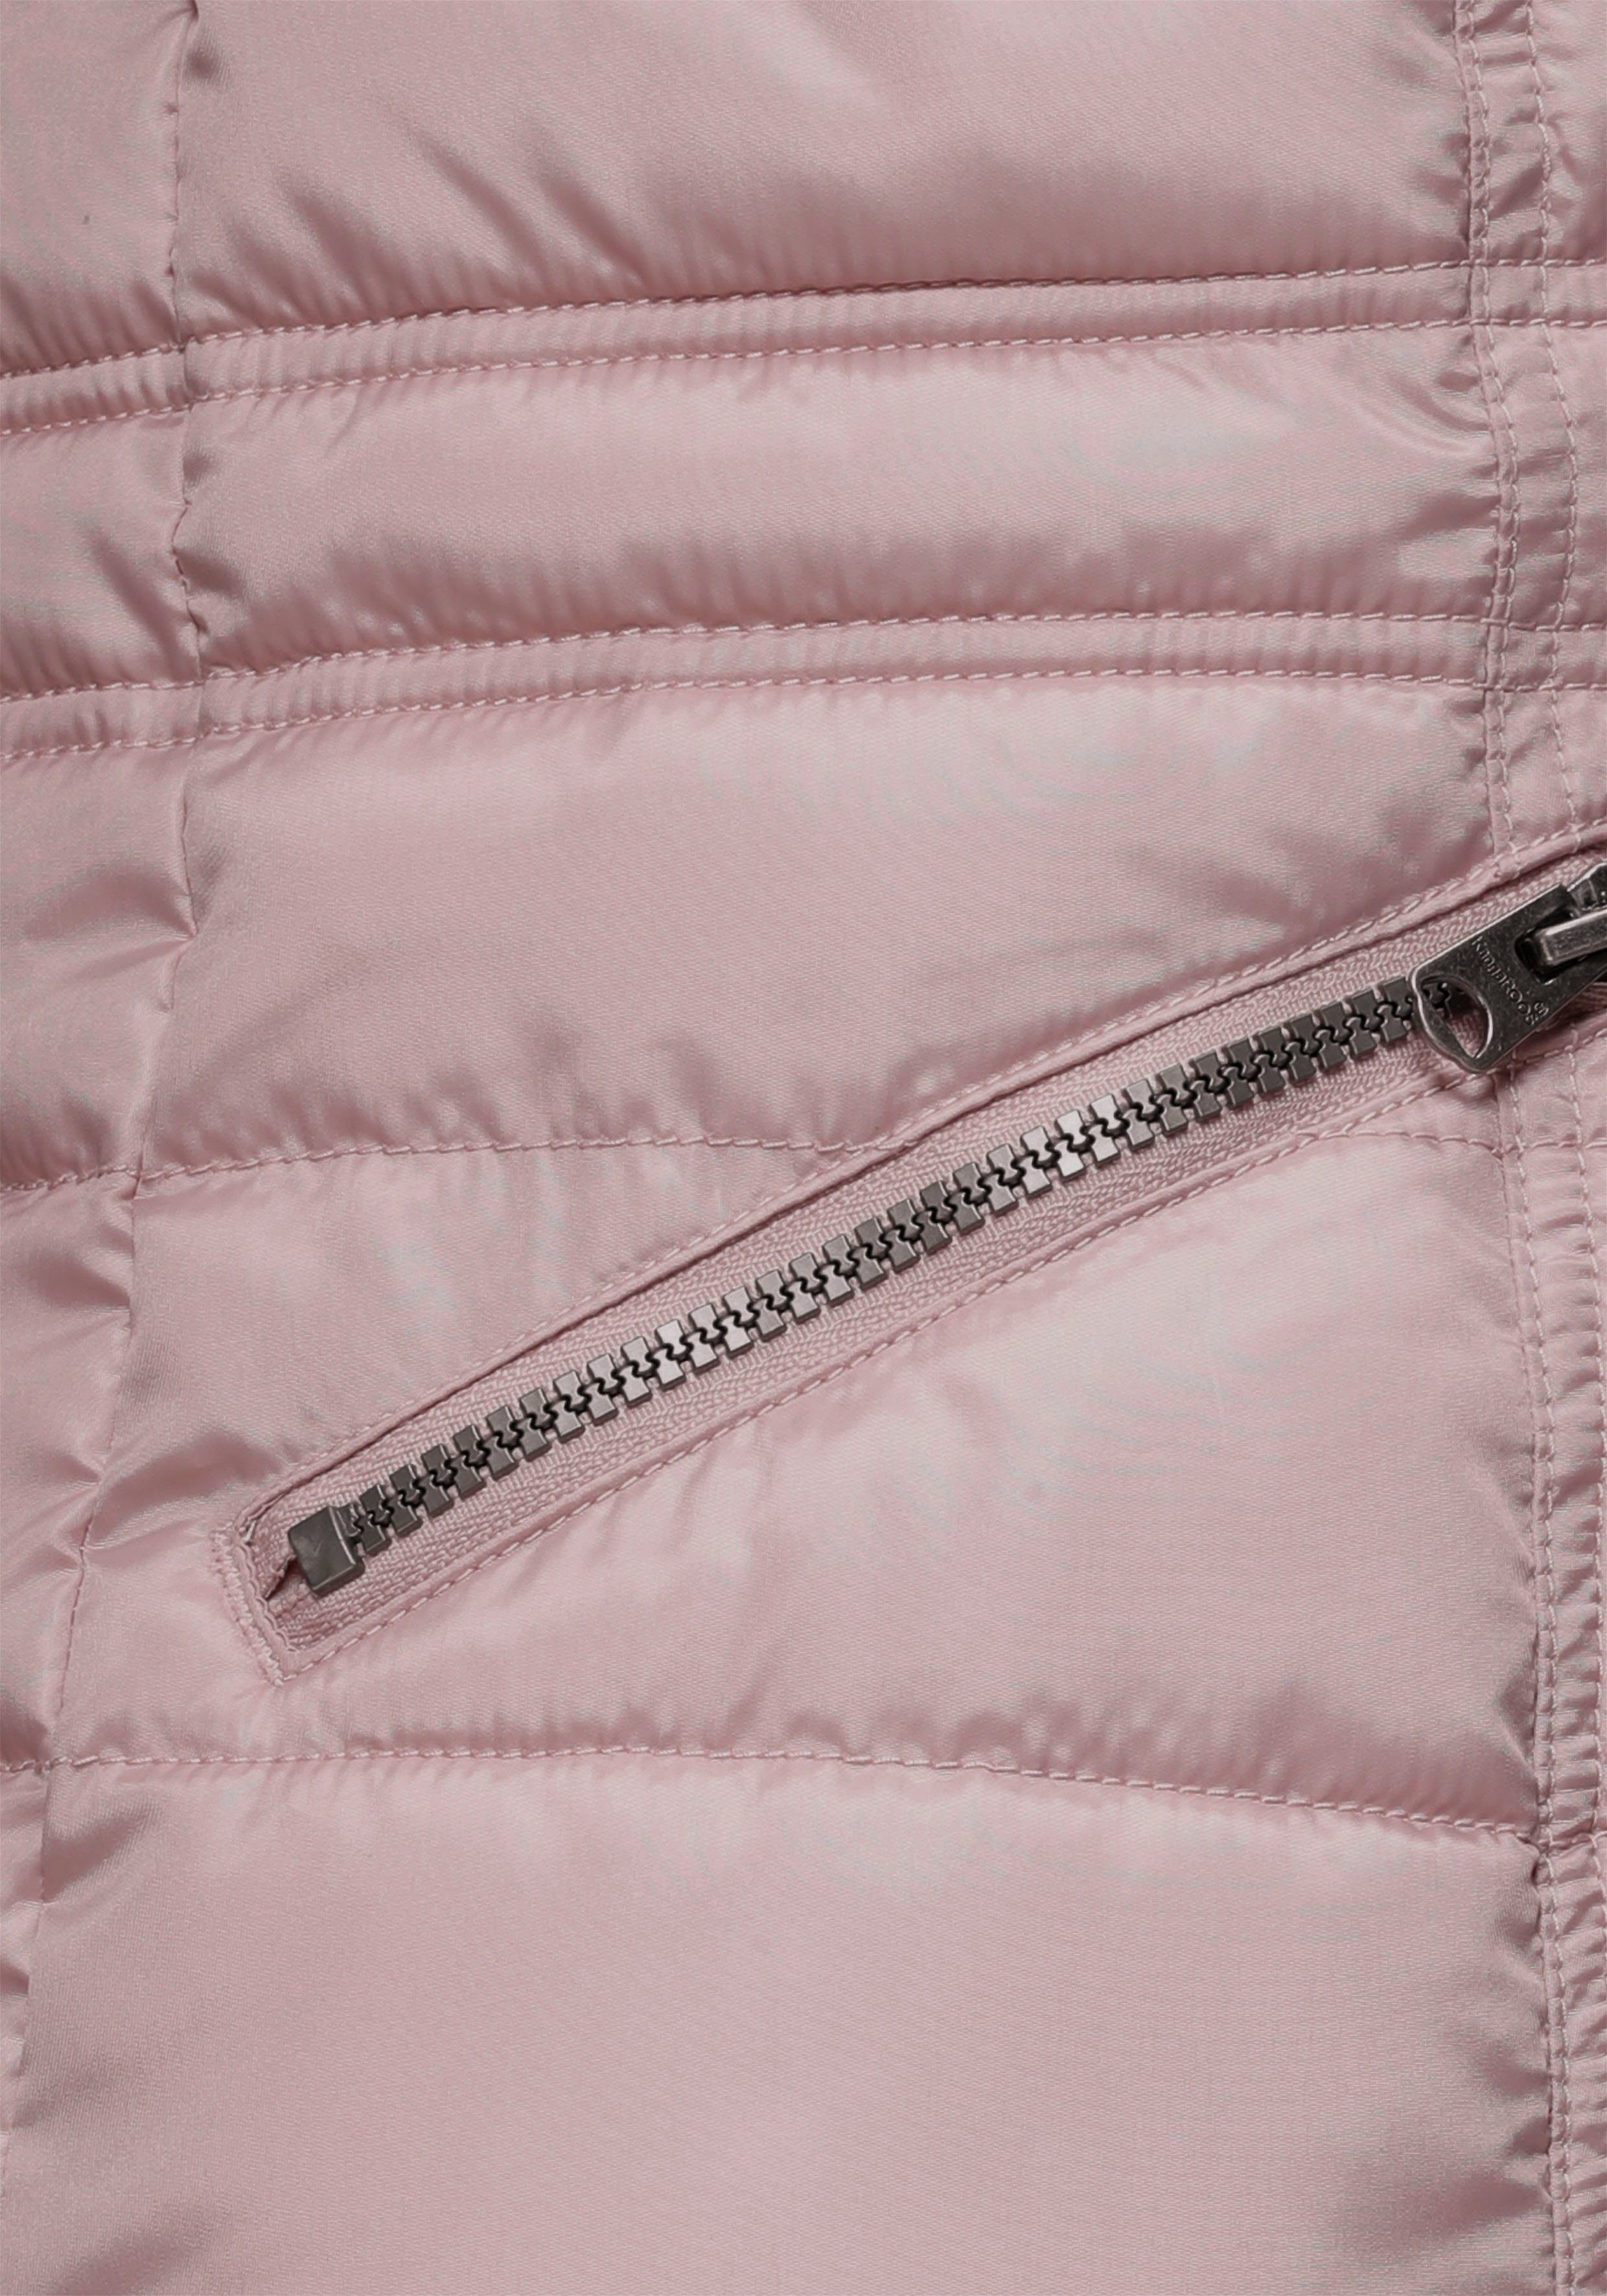 KangaROOS Steppjacke mit kuscheligem, abnehmbarem nachhaltigem Material) aus rosa der Kapuze Fellimitat-Kragen an (Jacke